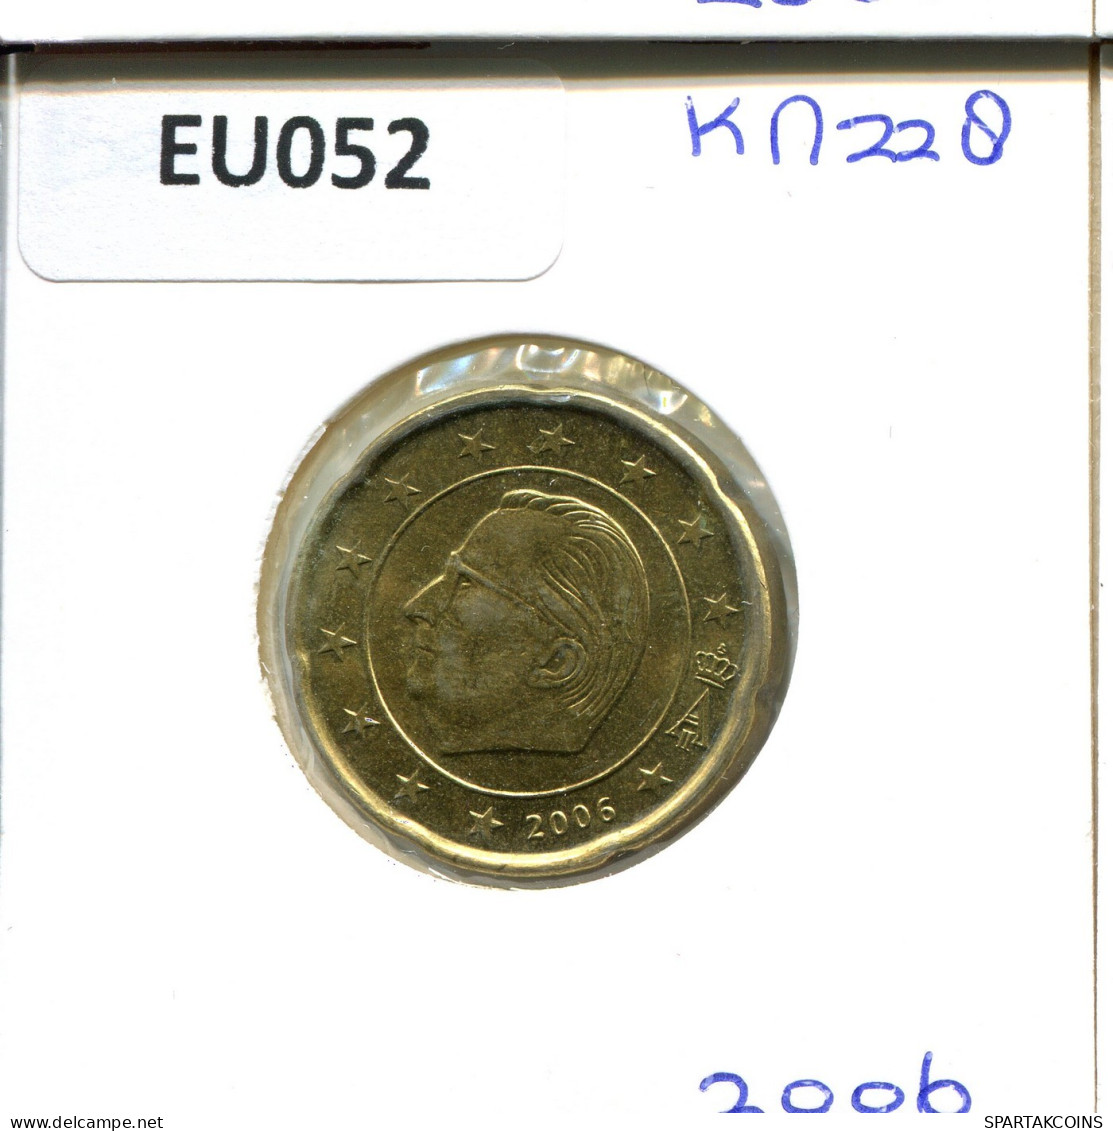 20 EURO CENTS 2006 BELGIUM Coin #EU052.U.A - Belgium